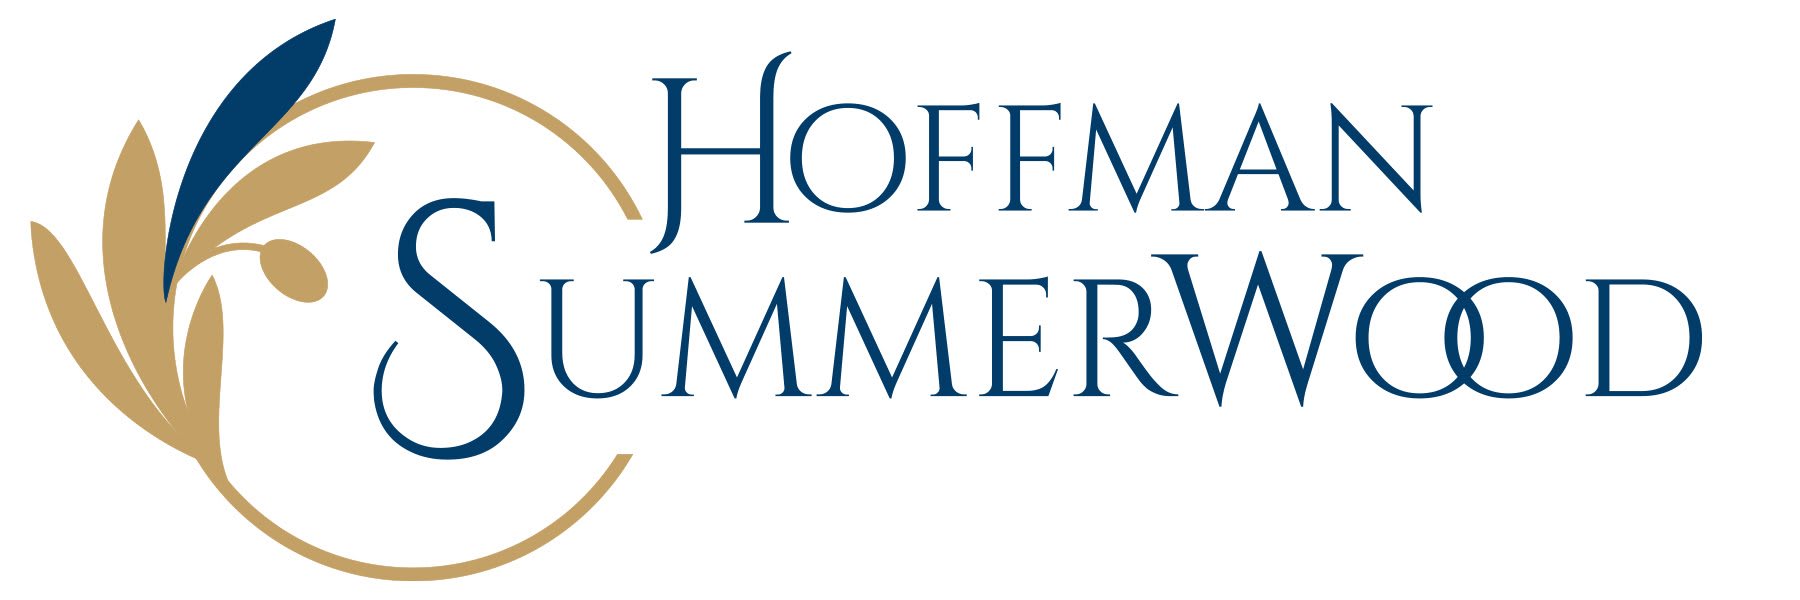 Hoffman Summerwood Community